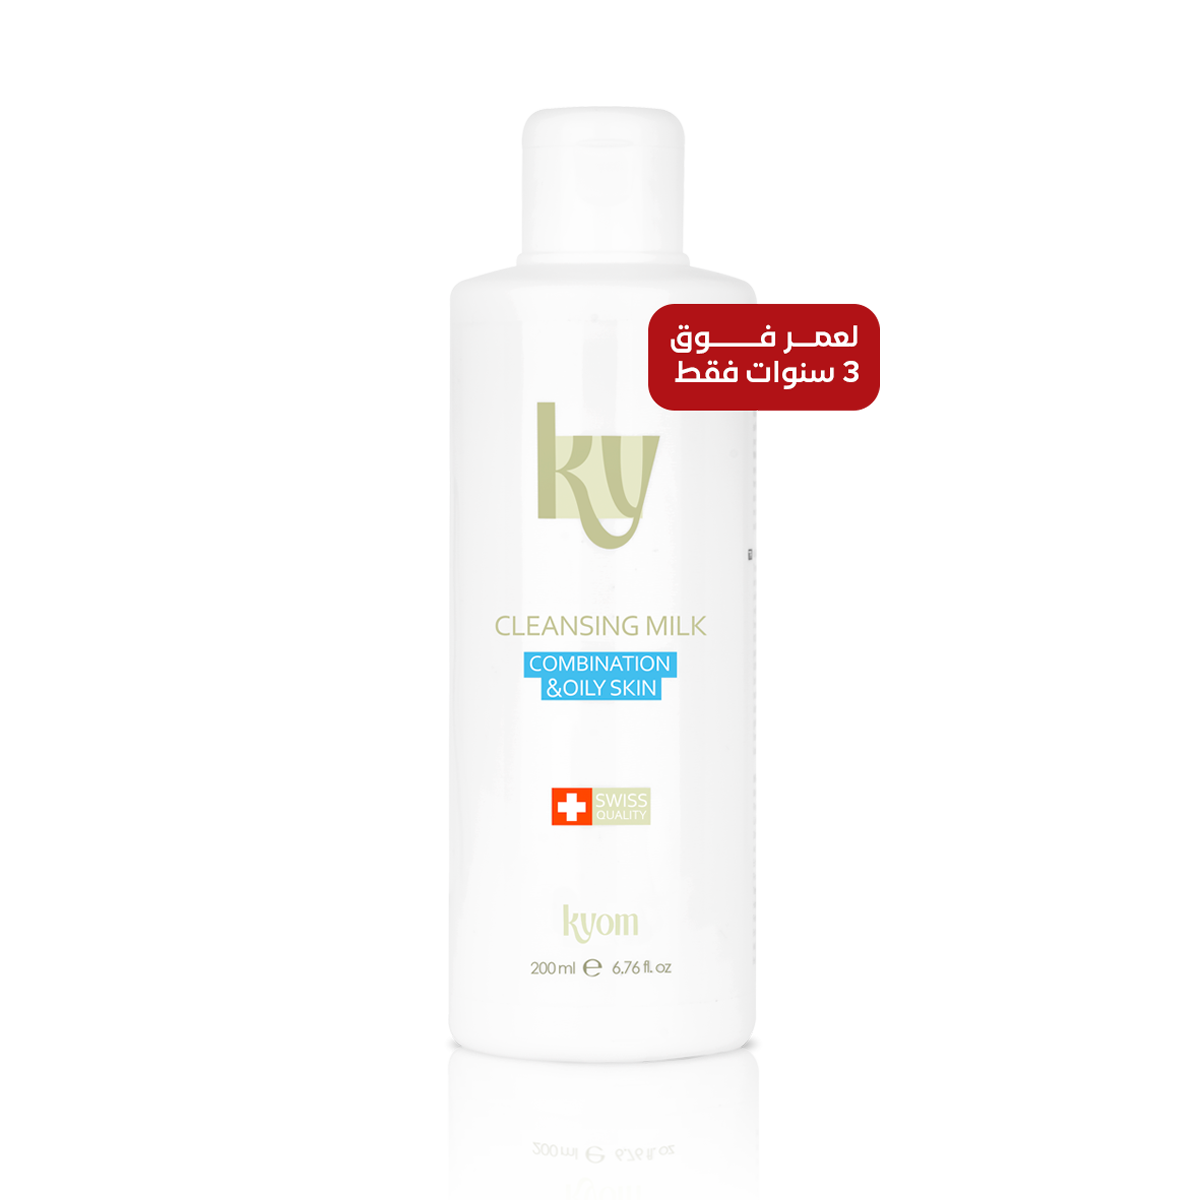 Kyom-Combination-Sensitive-Skin-Cleansing-Milk